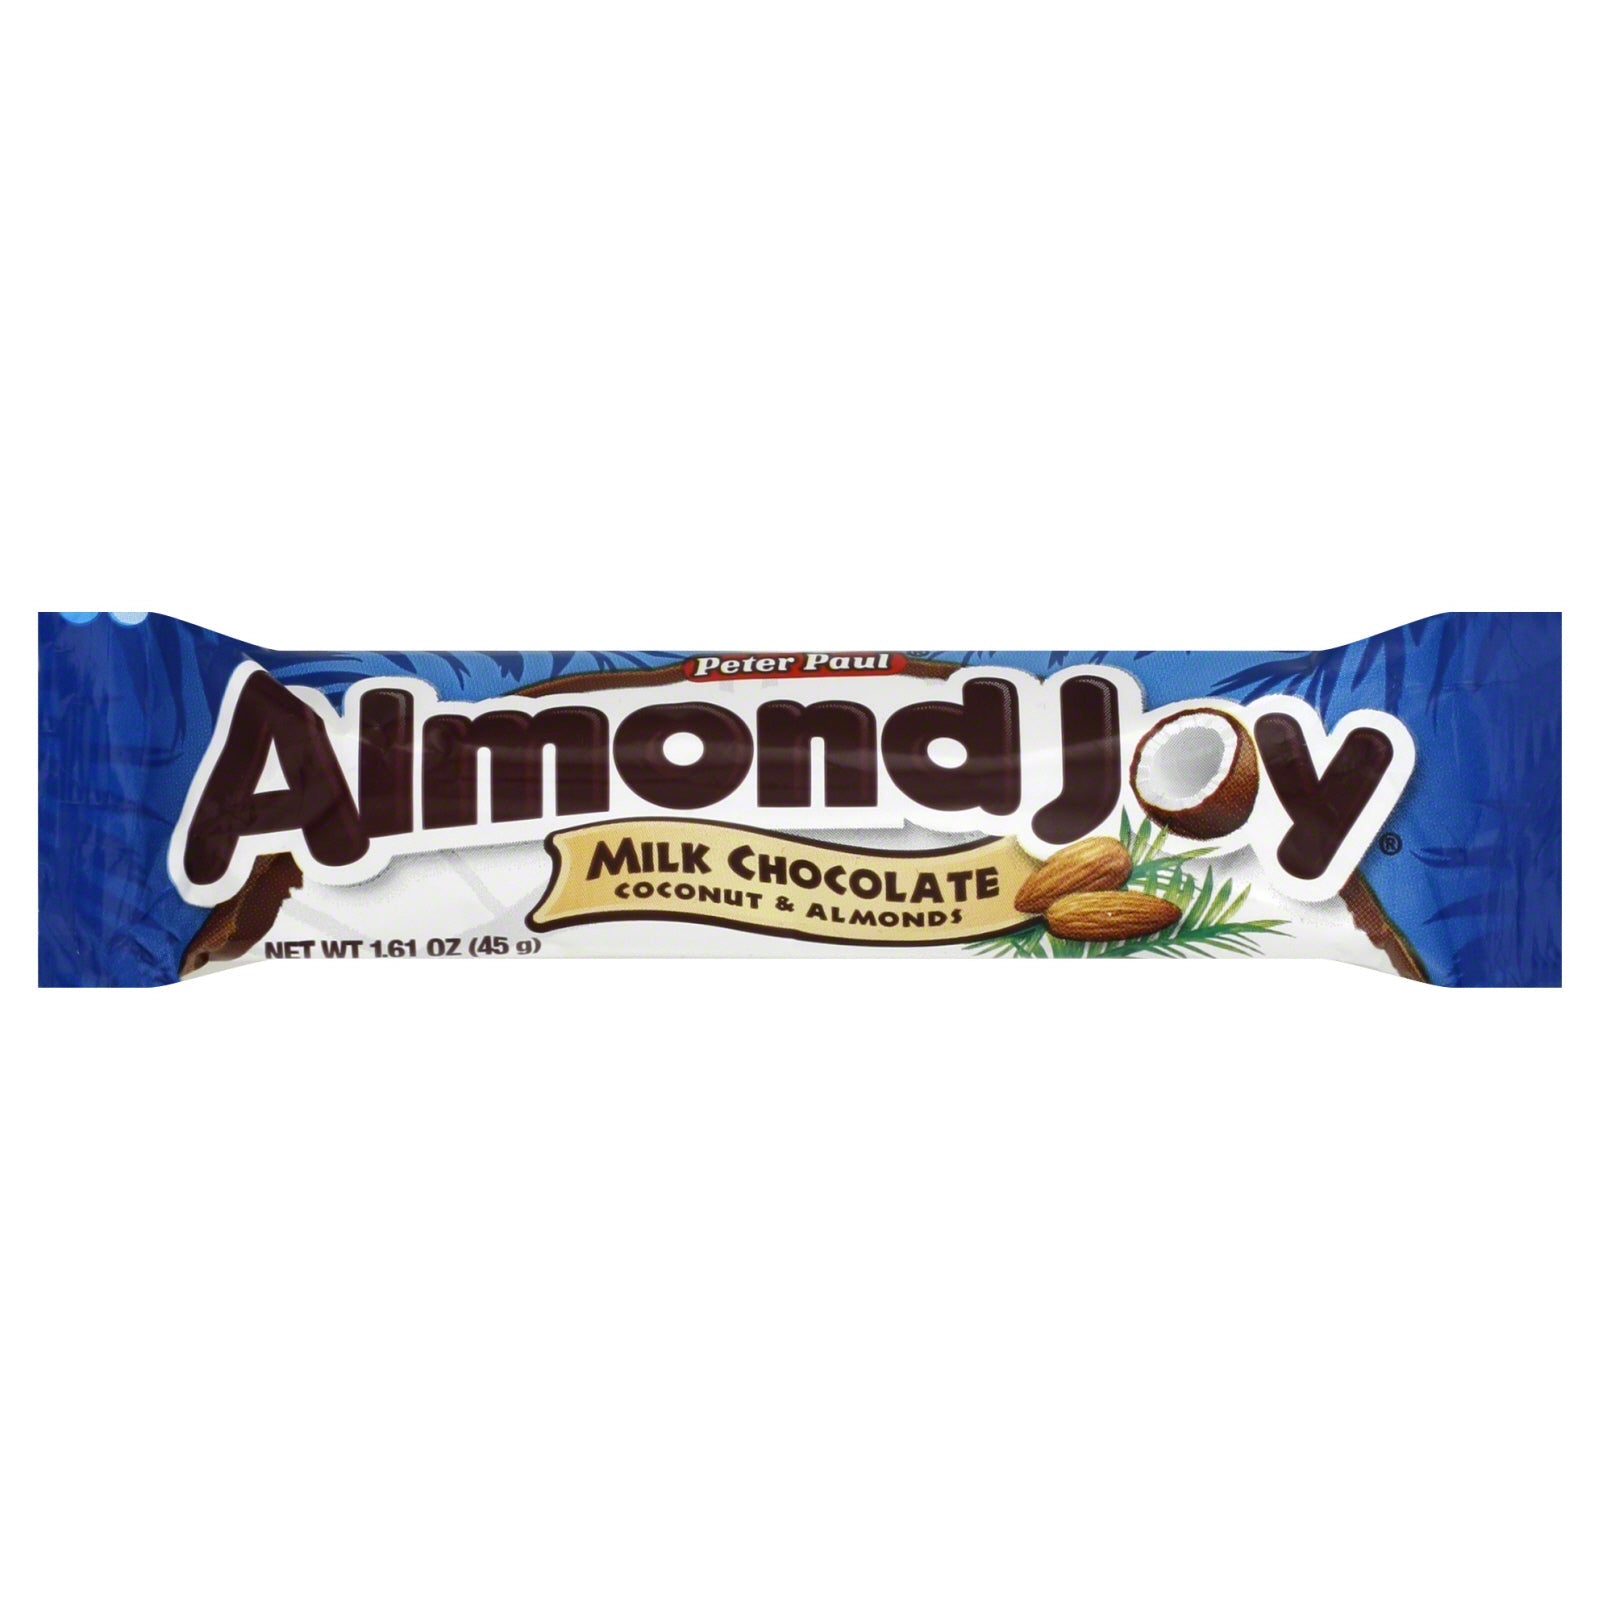 Almond Joy Milk Chocolate Bar, Coconut & Almonds, 1.61 oz (45 g)